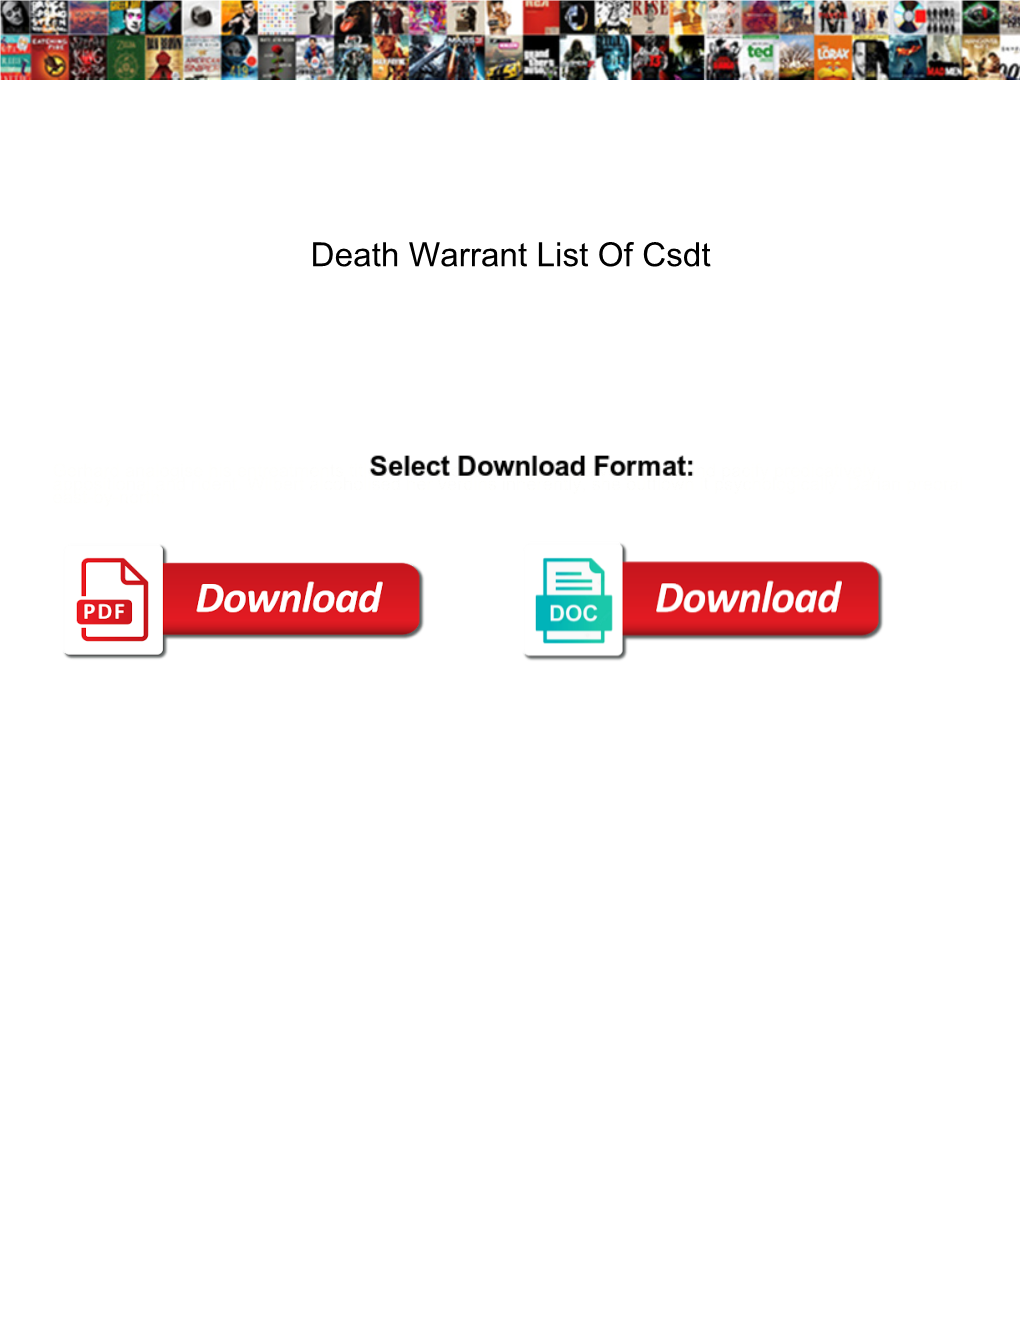 Death Warrant List of Csdt